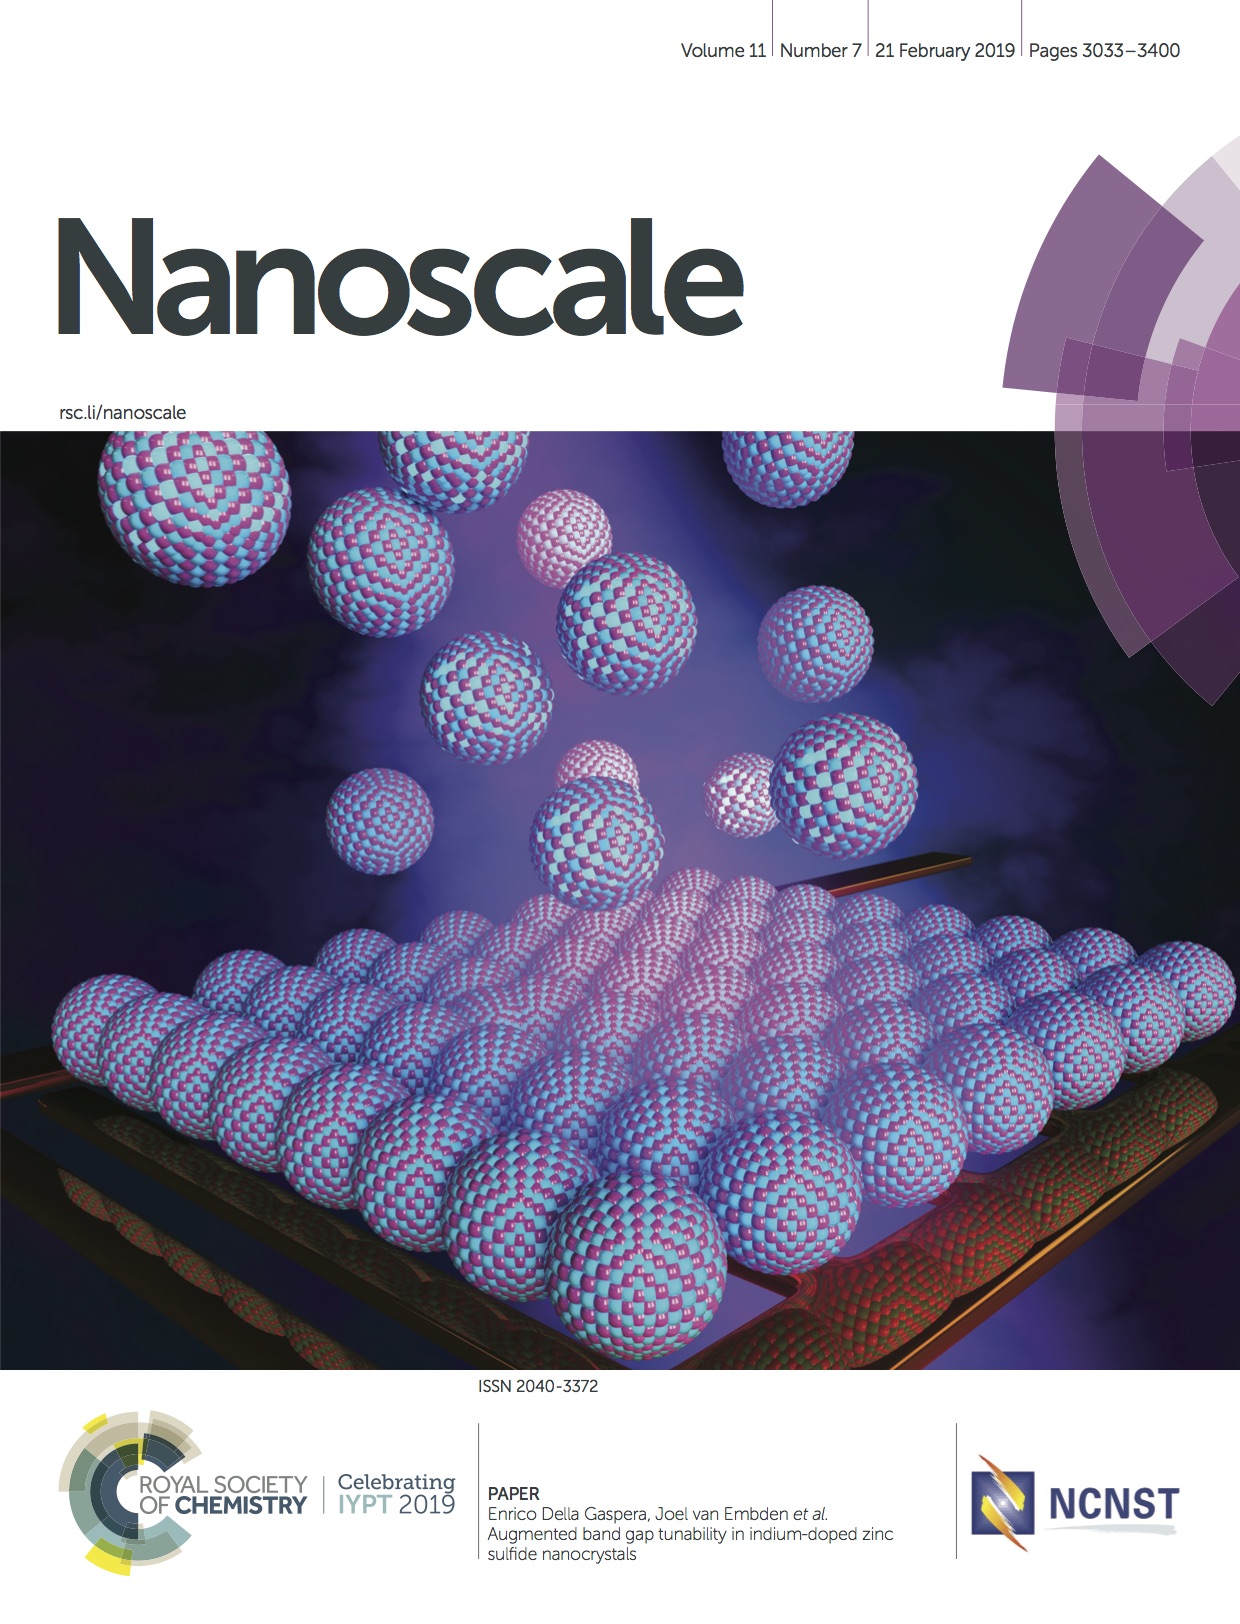 CnrNano research got the cover of Nanoscale Journal